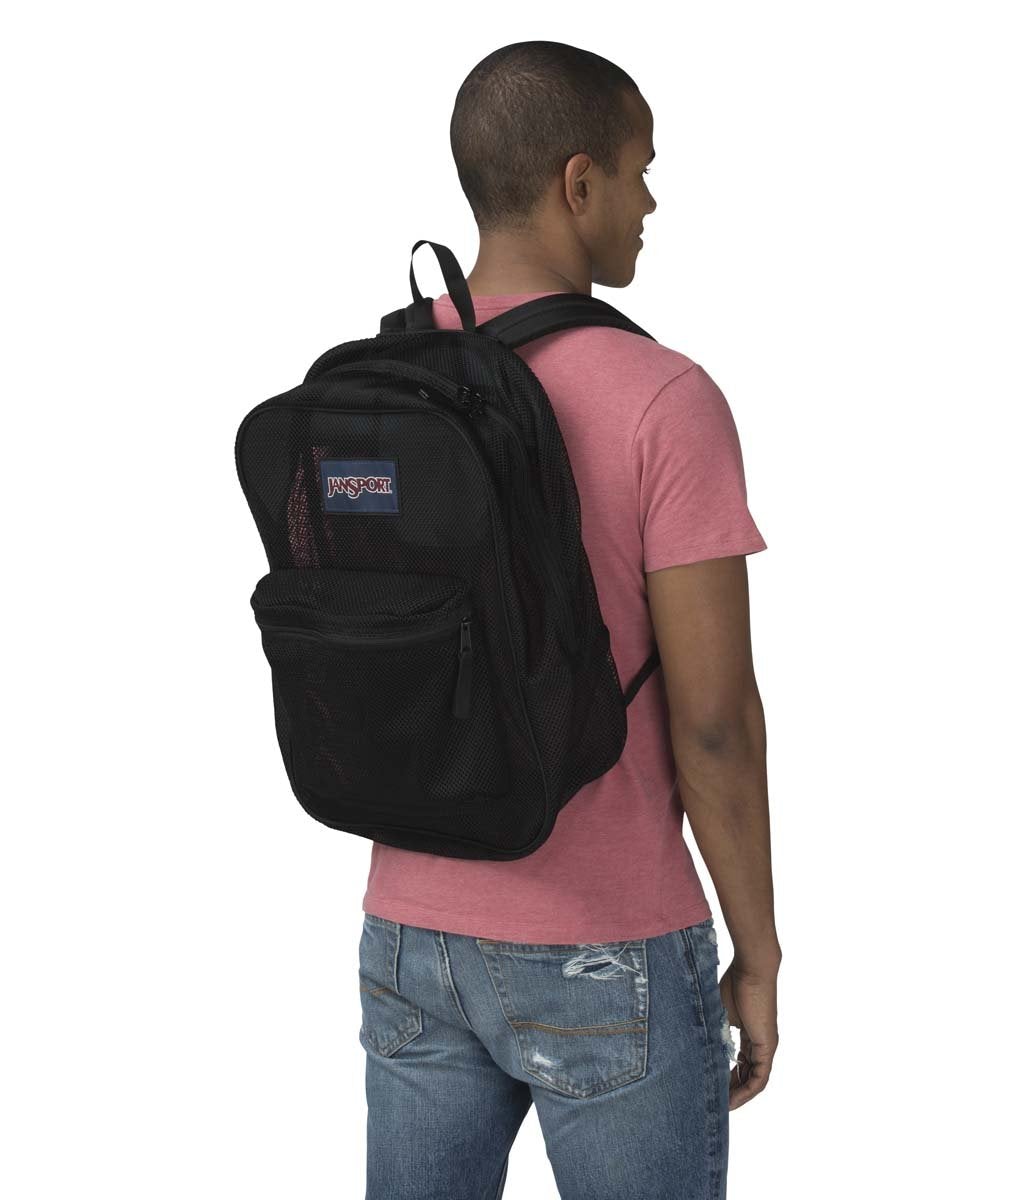 JanSport Europe MESH PACK Backpack BLACK